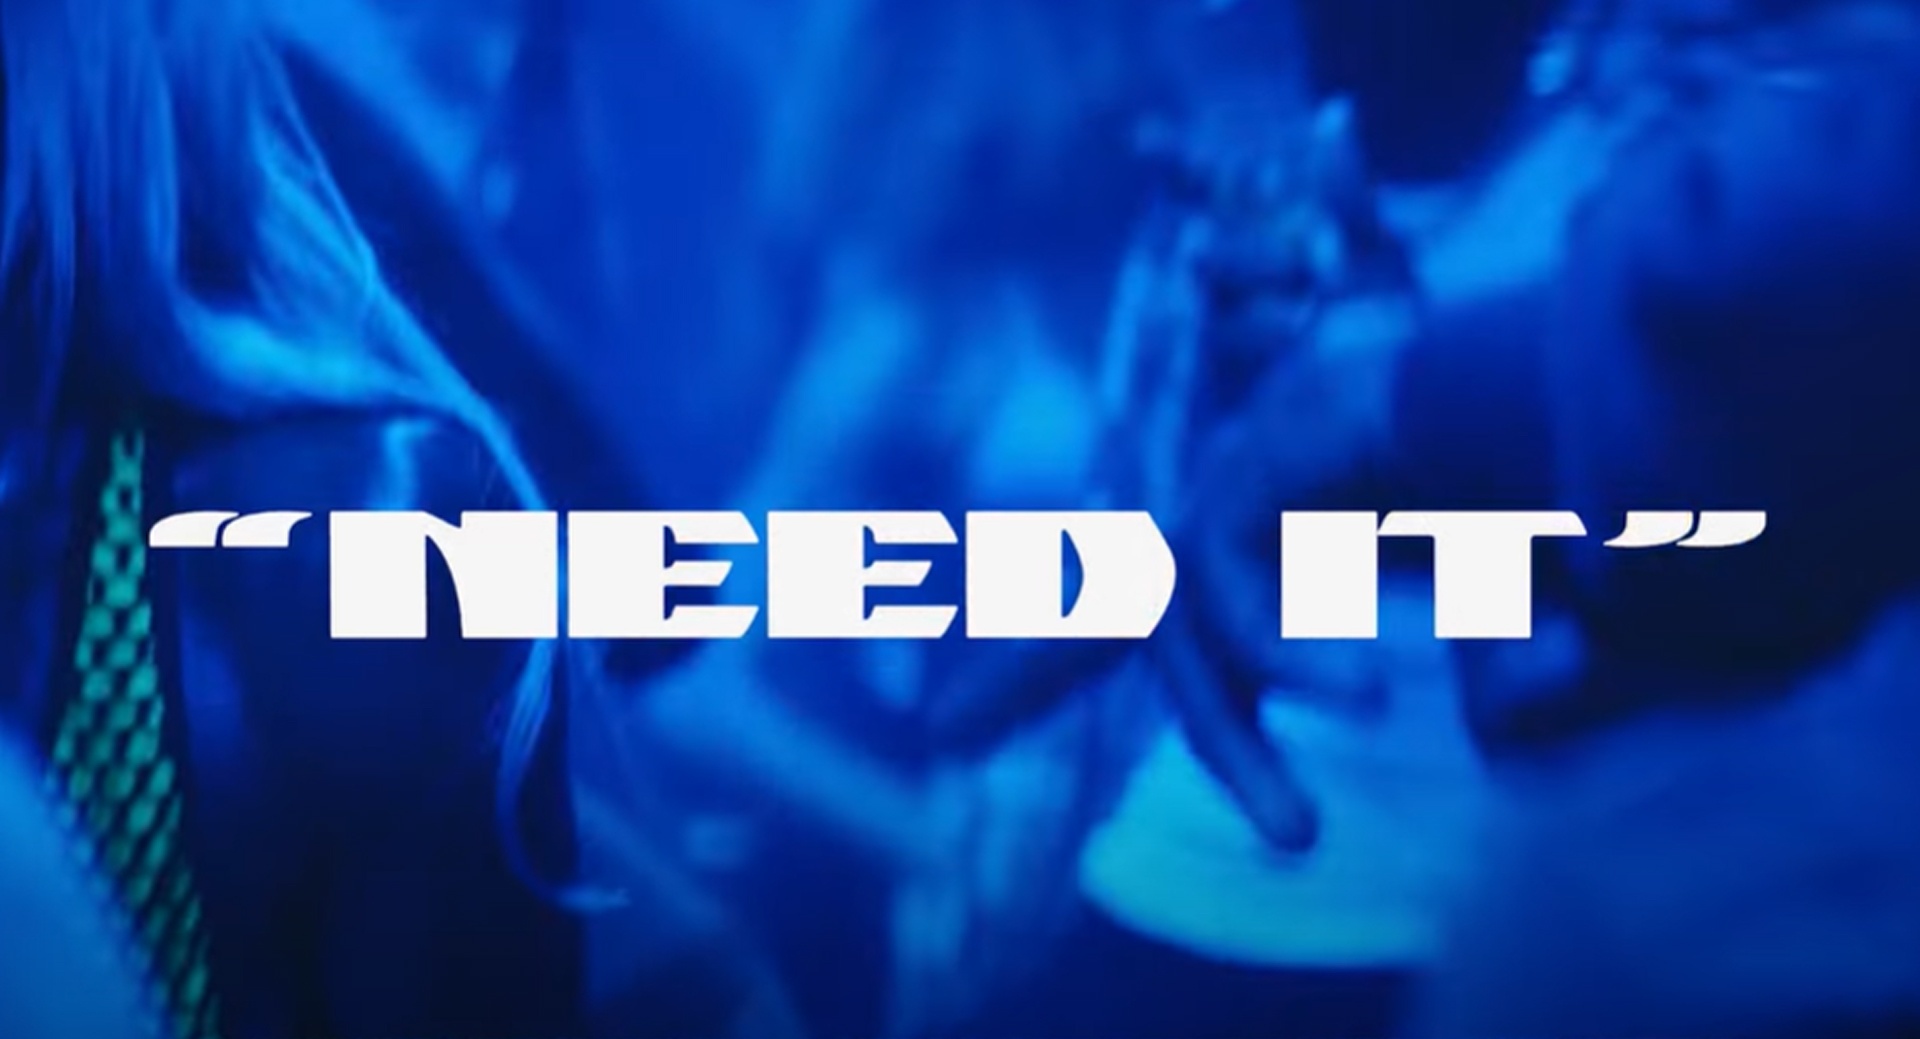 Kaytranada shares new visuals for "Need It" feat. Masego